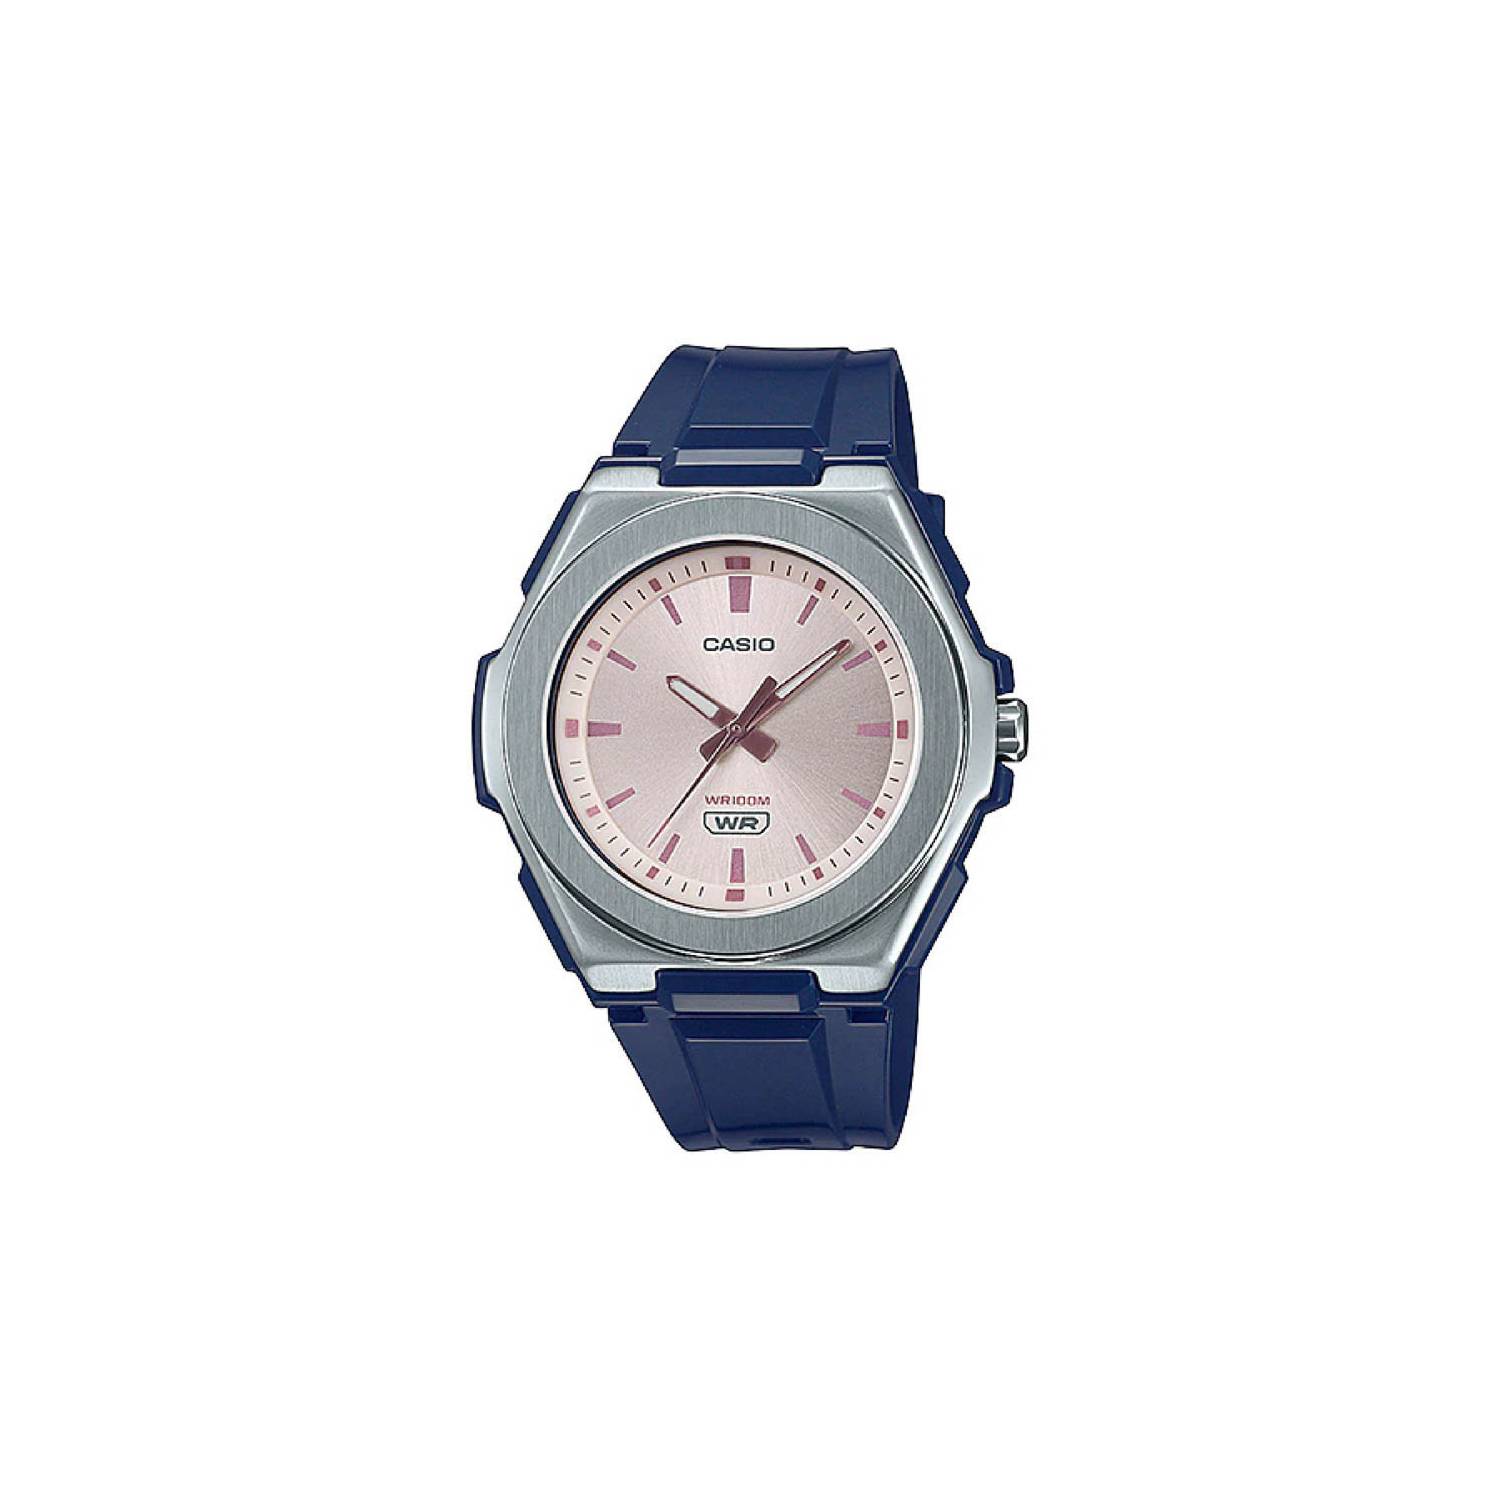 Reloj Mujer Casio LWA-300H-7EV, Relojes